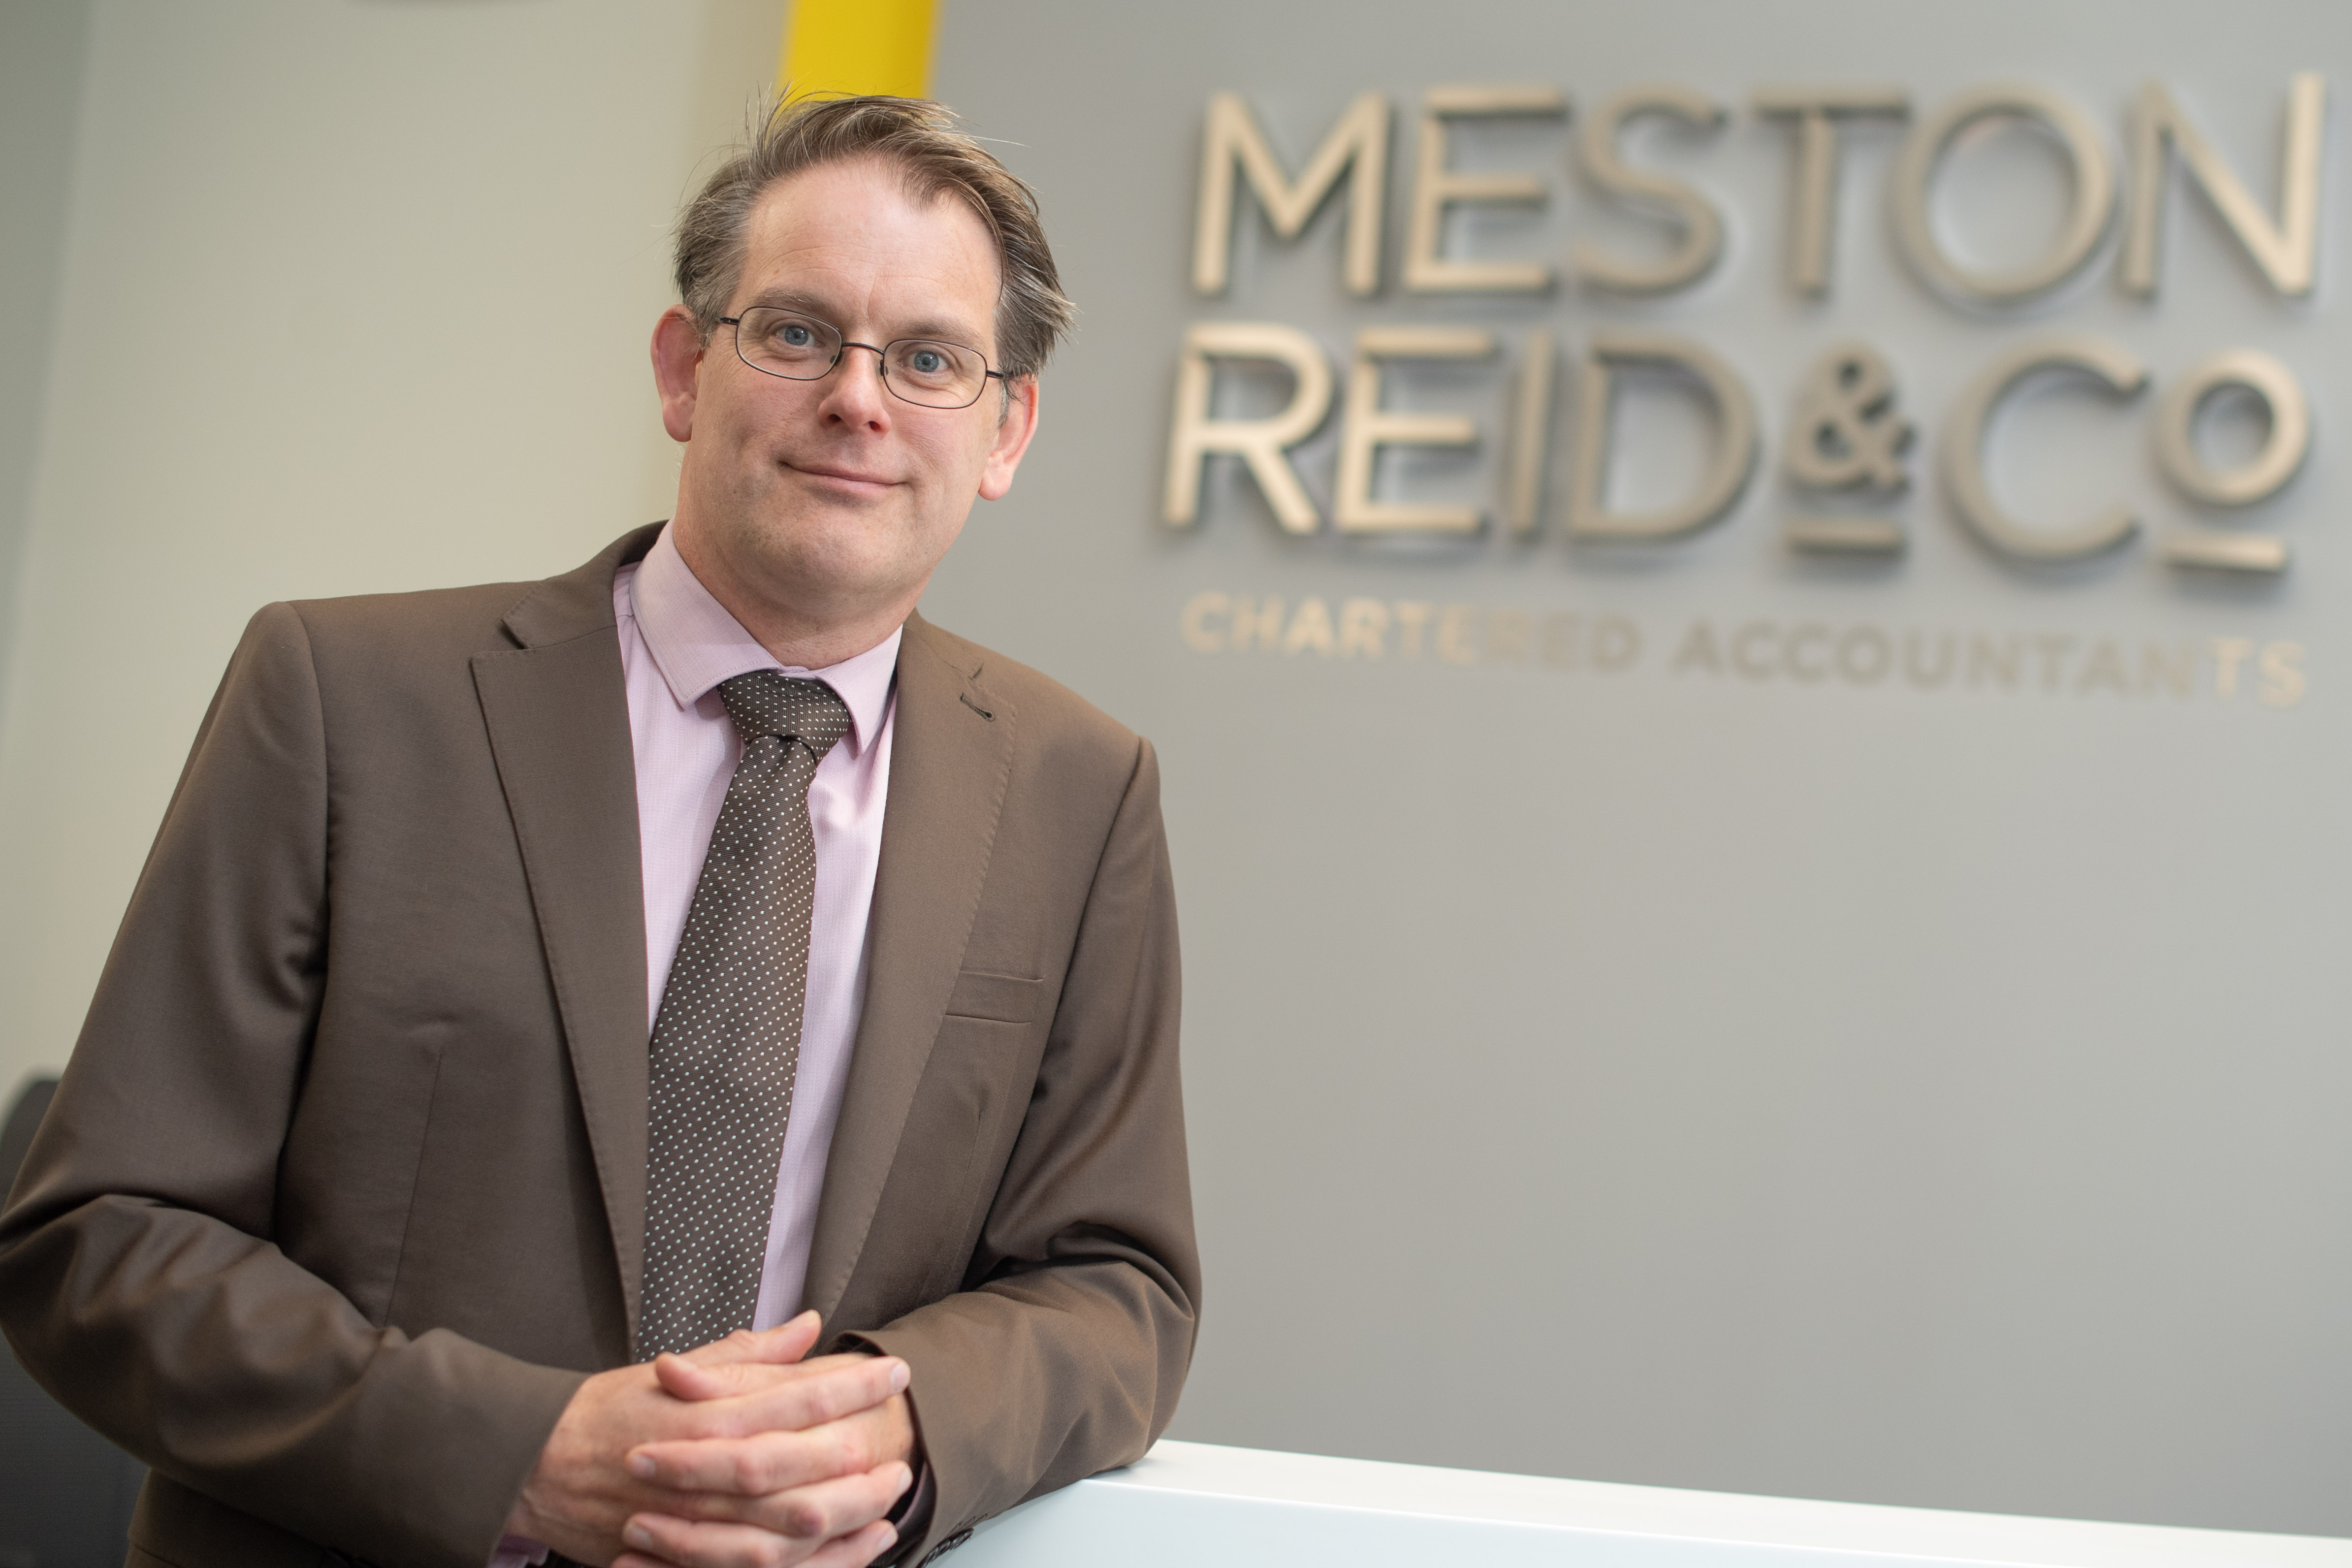 Meston Reid & Co promotes Stuart MacPherson to senior manager